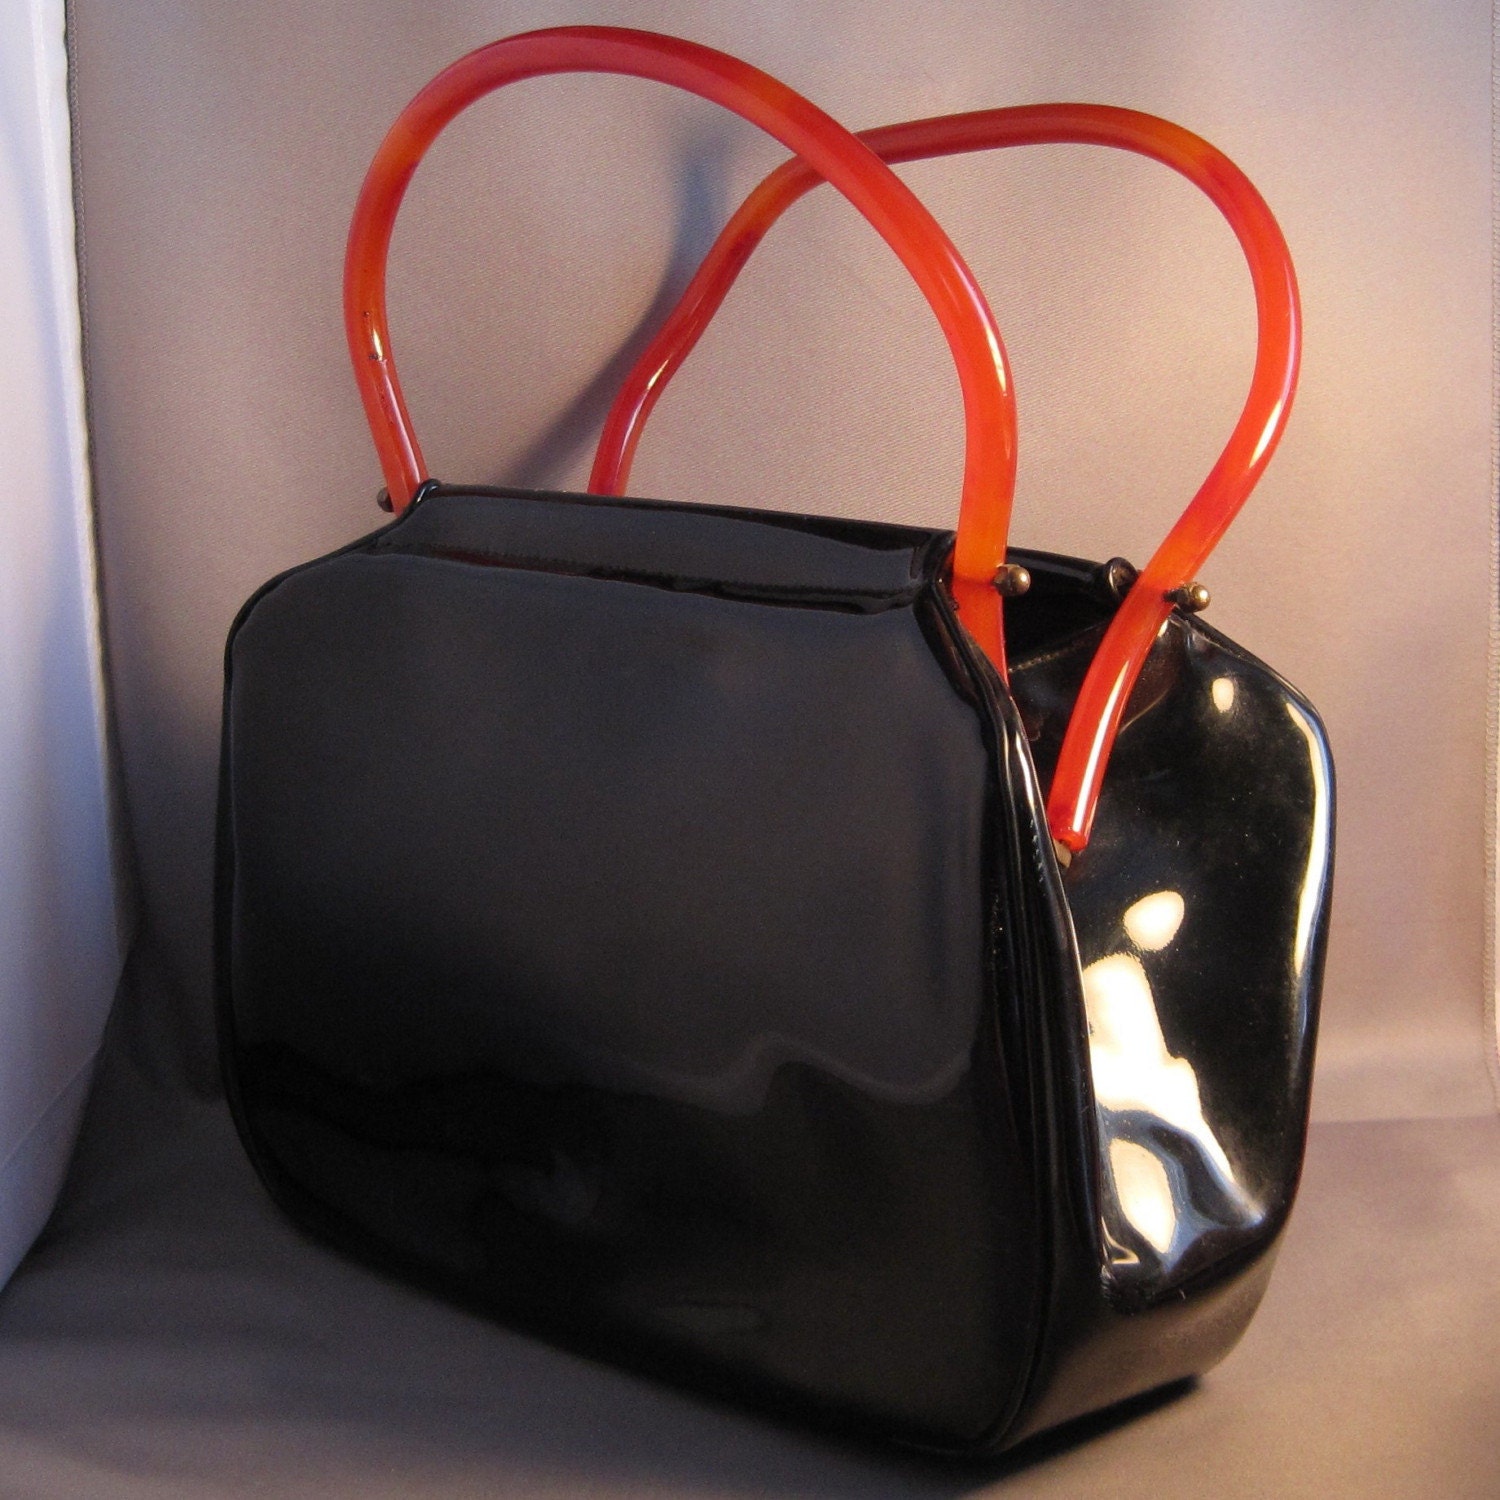 Black Patent Leather Handbag with Faux Amber Handles Purse Bag